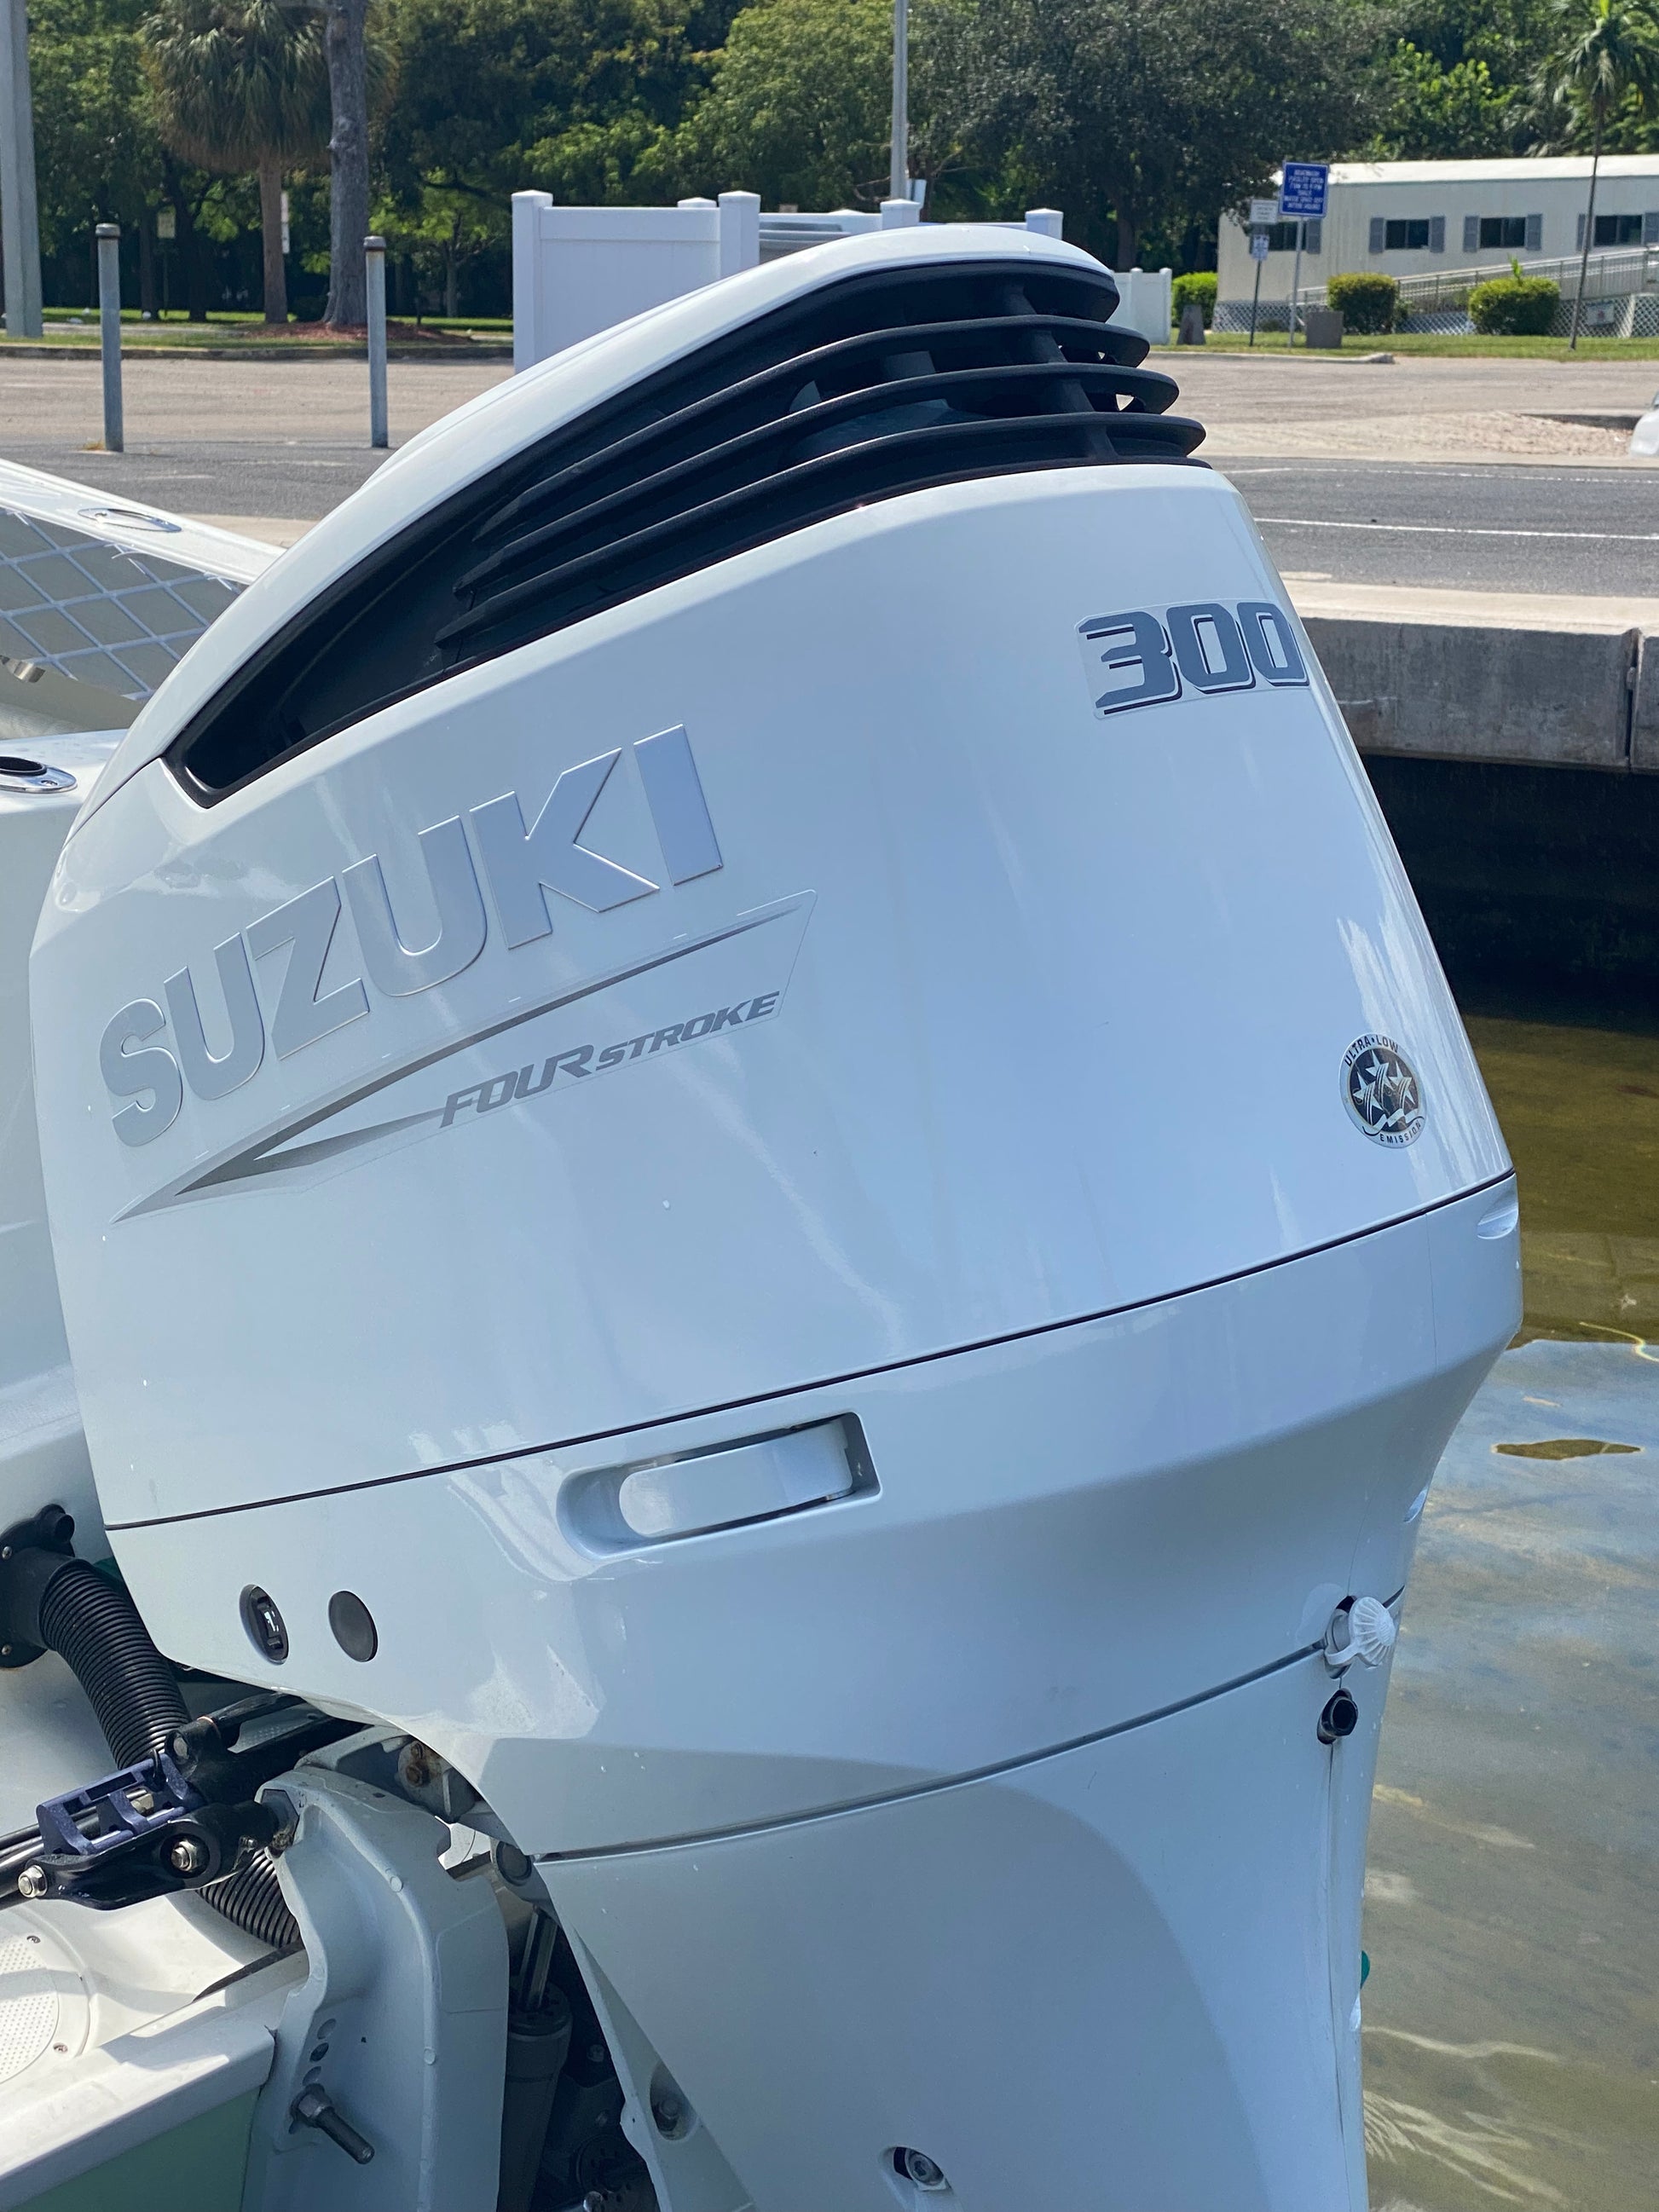 Suzuki Outboard Flush Quick Connect rear mount